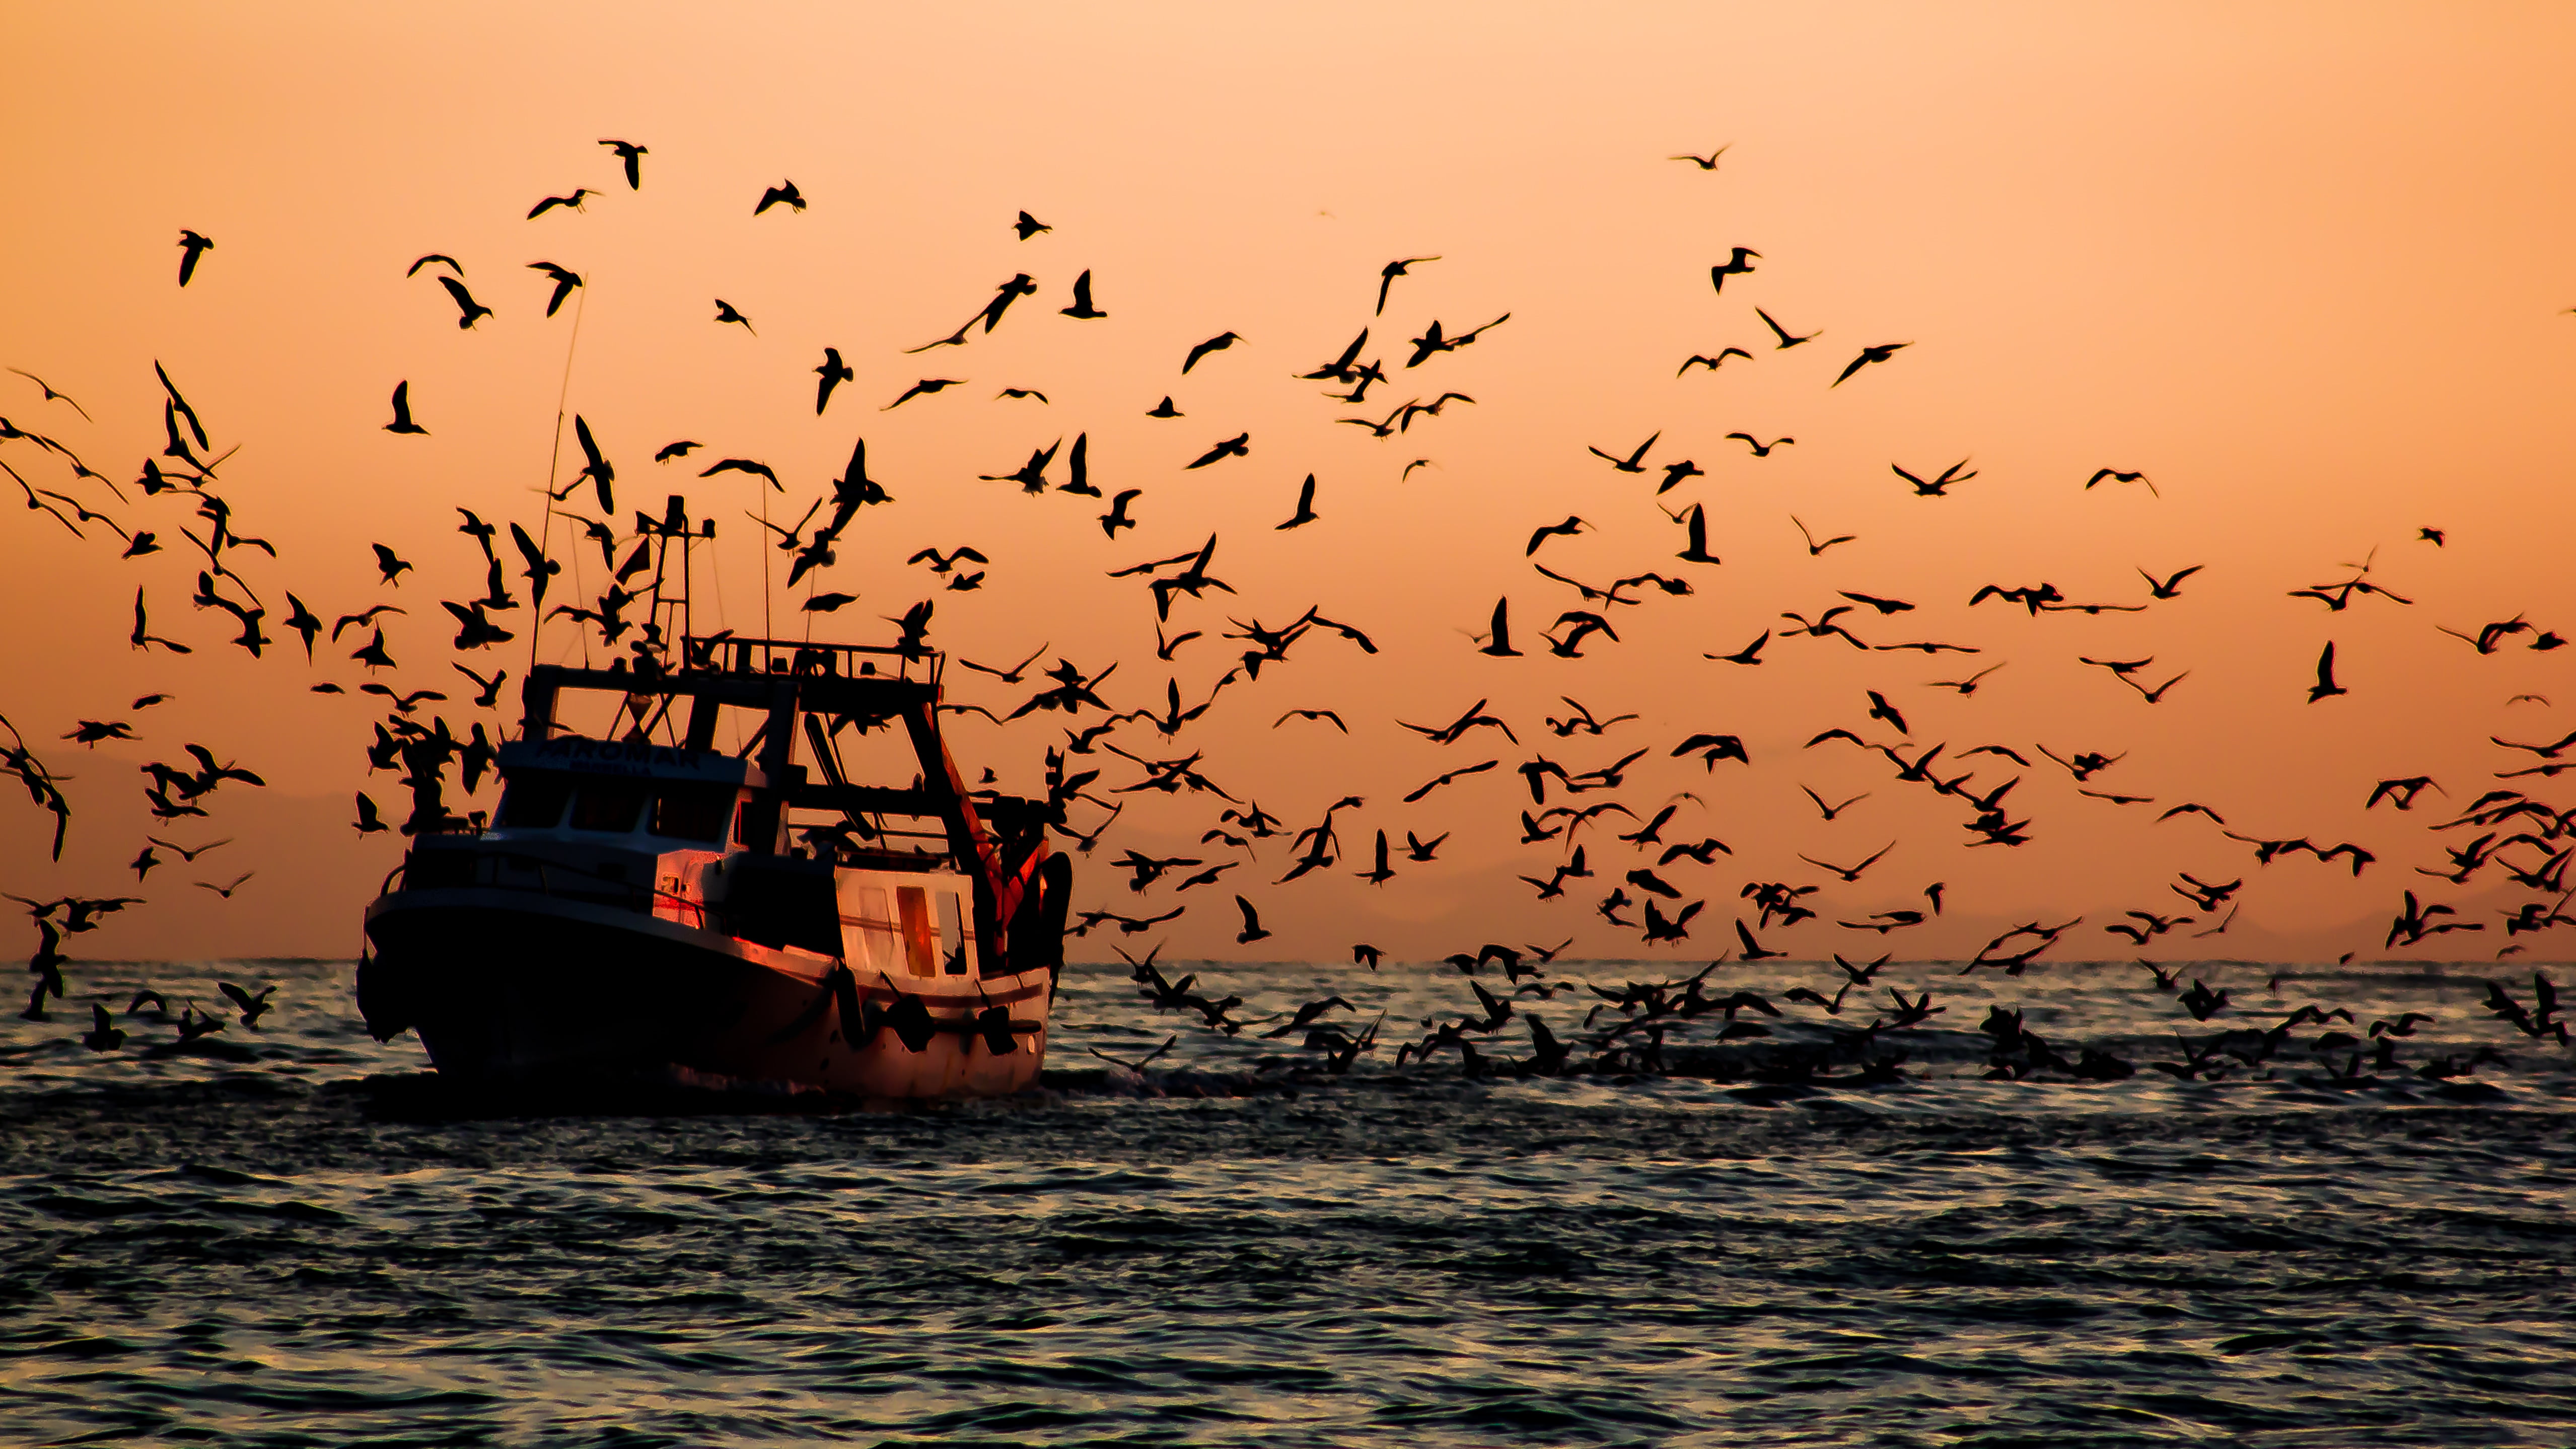 flock of birds near boat sailing, Return, Barco, pesquero, pesca